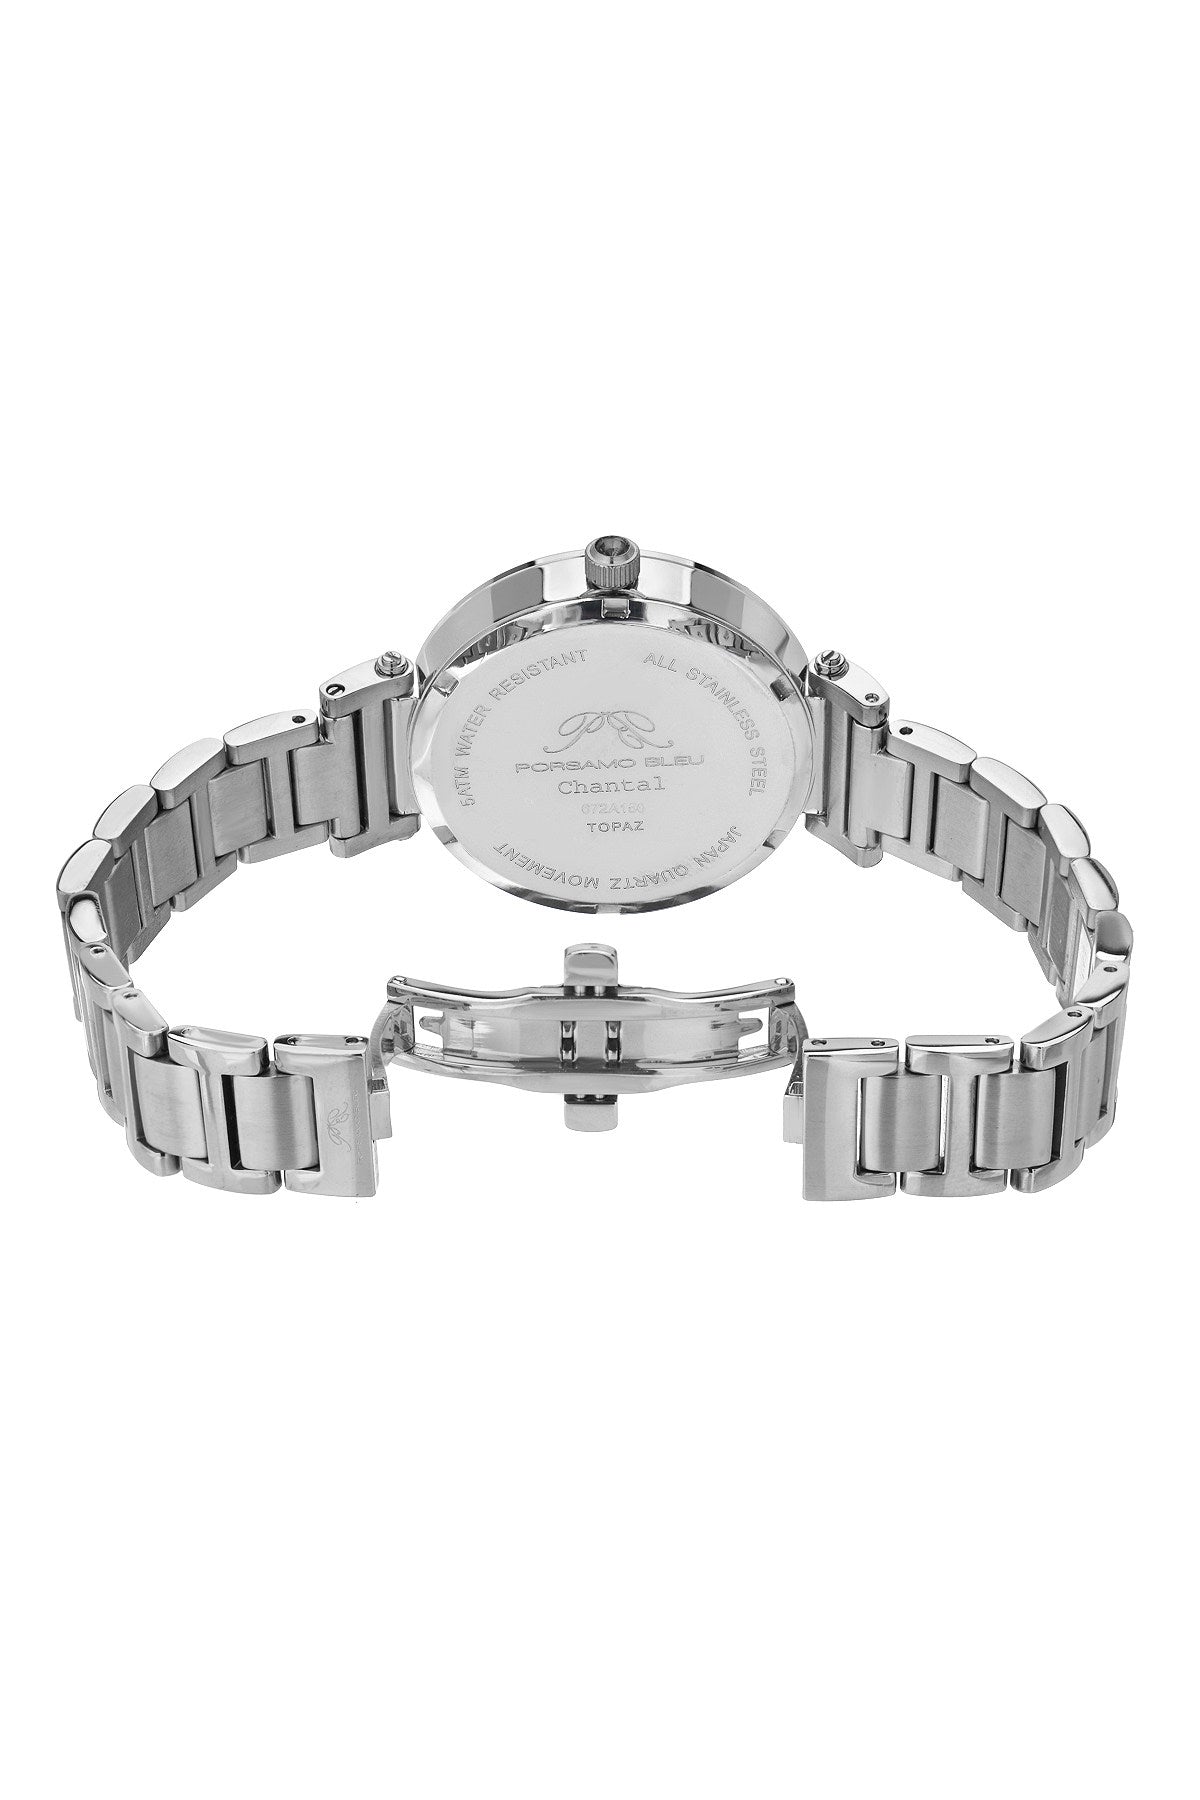 Porsamo Bleu Chantal luxury topaz women's stainless steel watch, silver, black 672ACHS